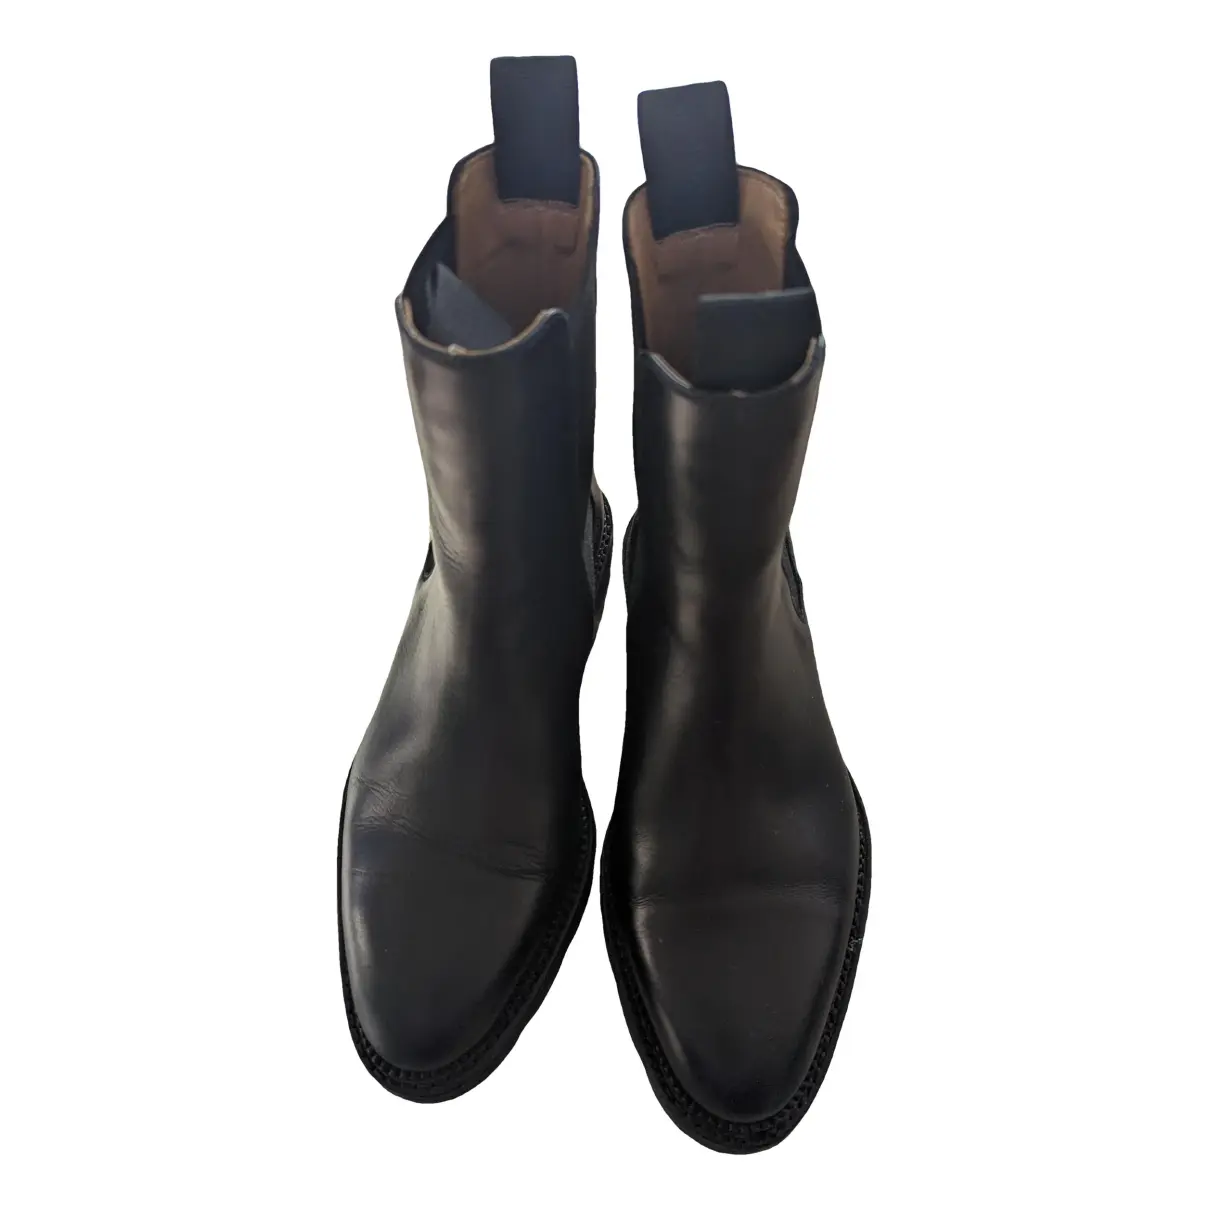 Kori leather western boots